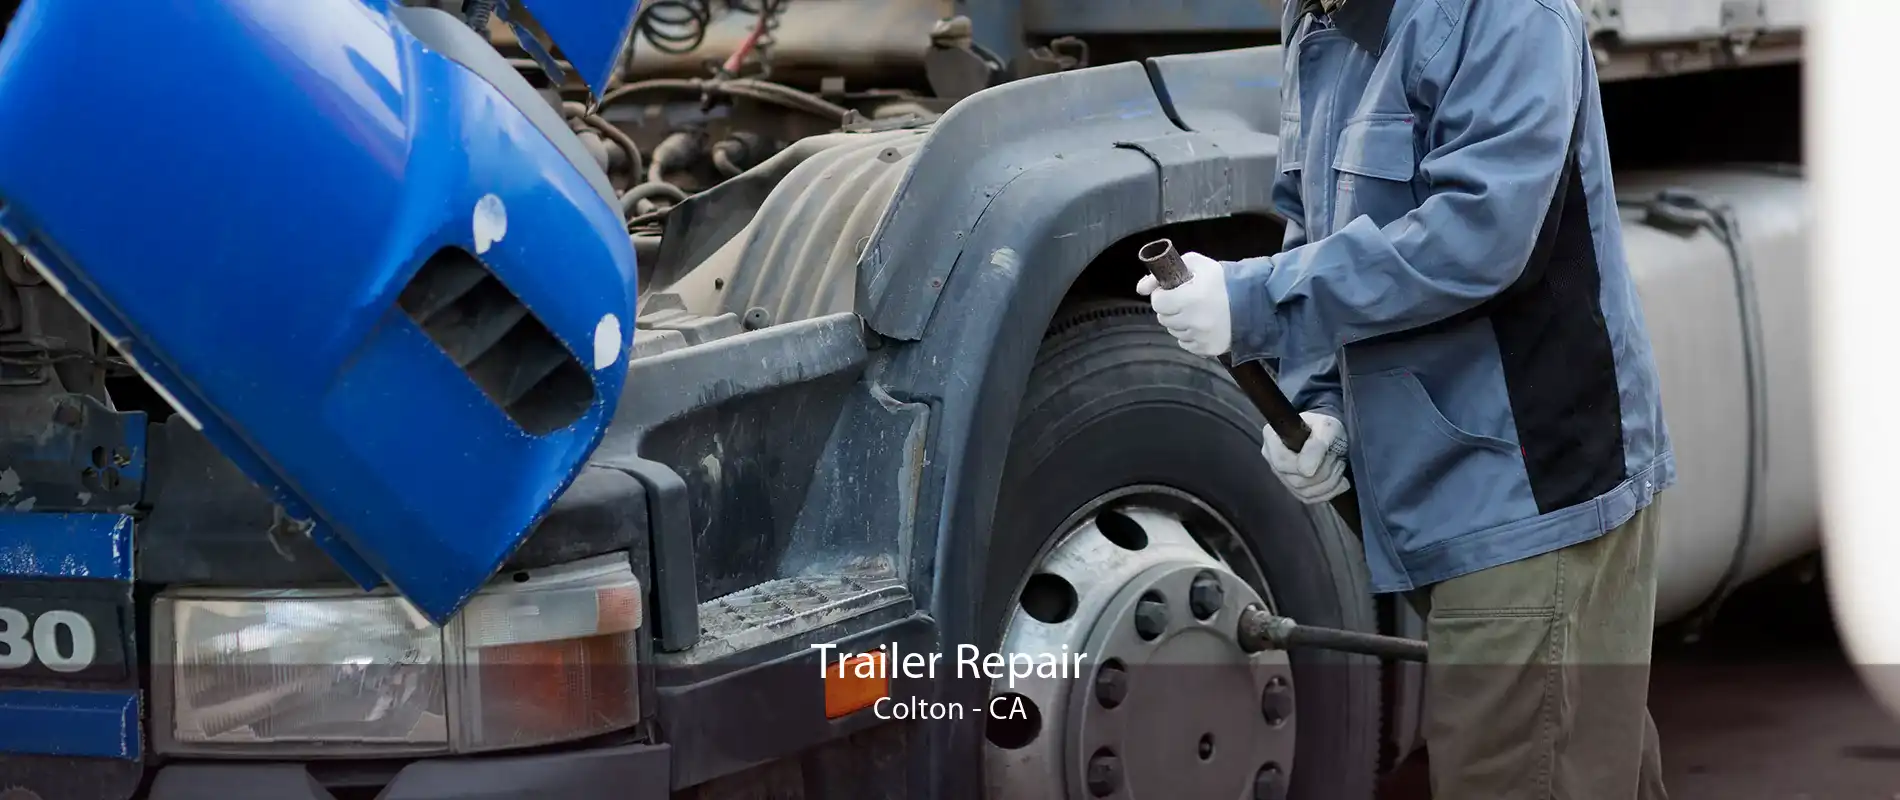 Trailer Repair Colton - CA